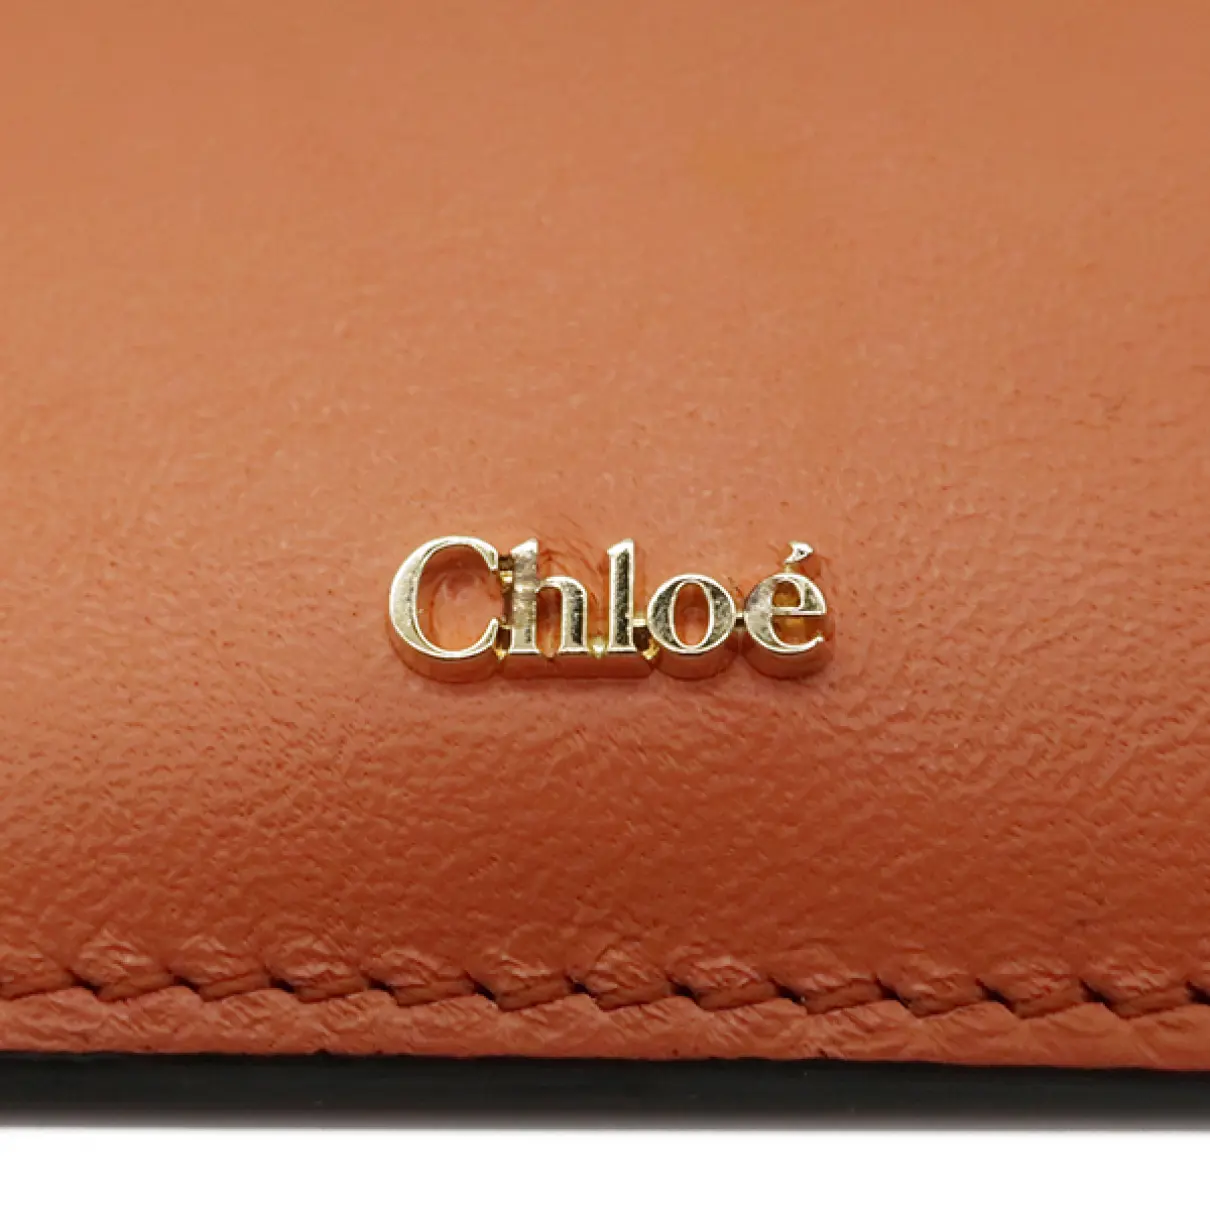 Leather card wallet Chloé